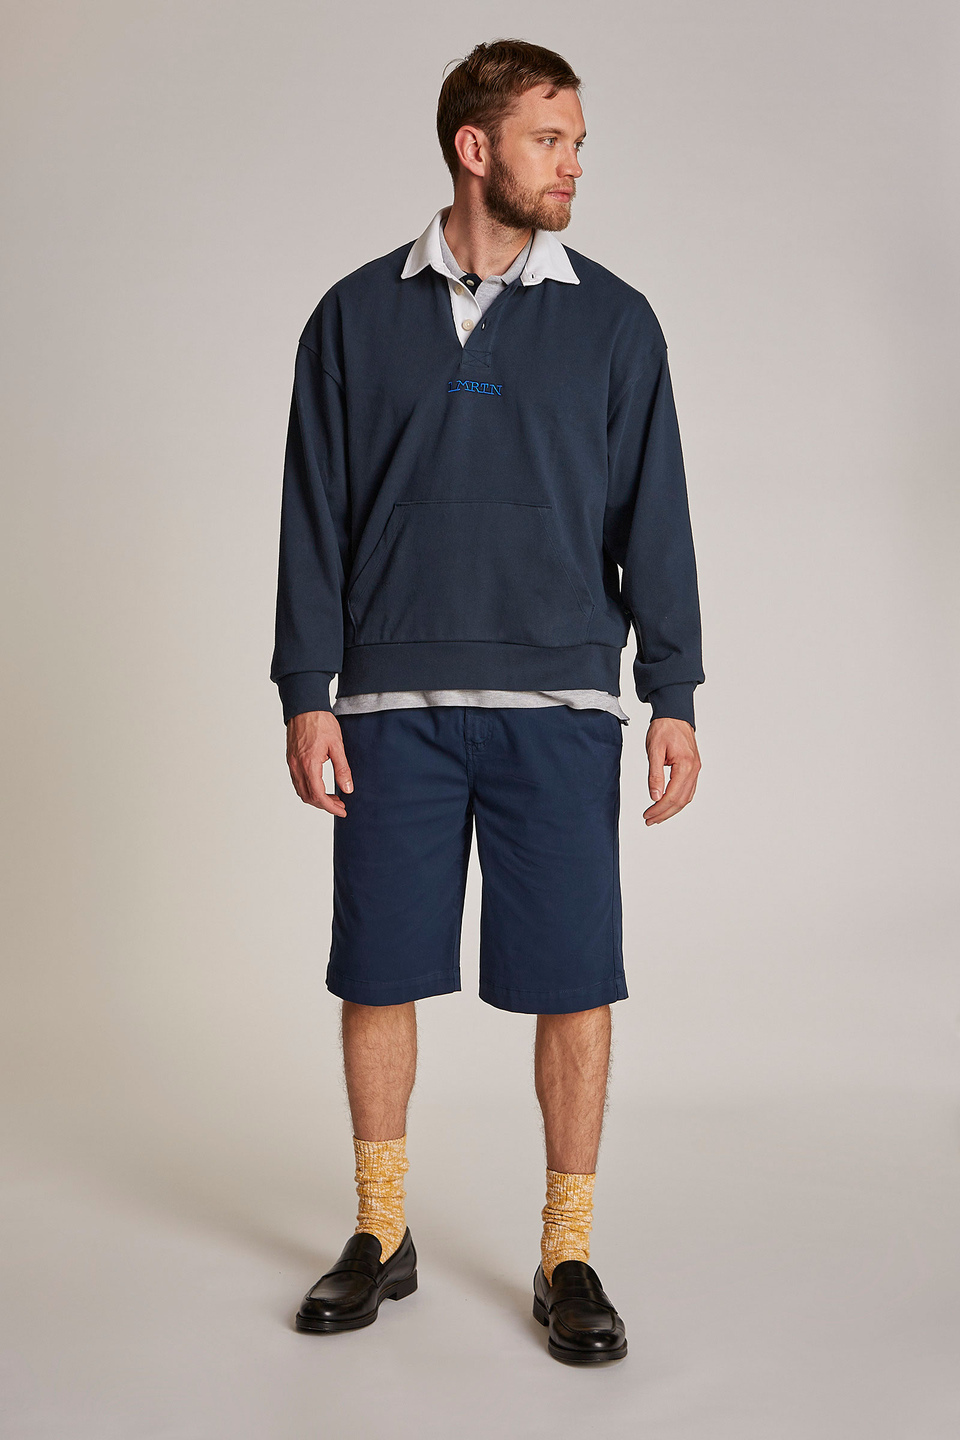 Men's oversized 100% cotton sweatshirt featuring a contrasting collar - La Martina - Official Online Shop